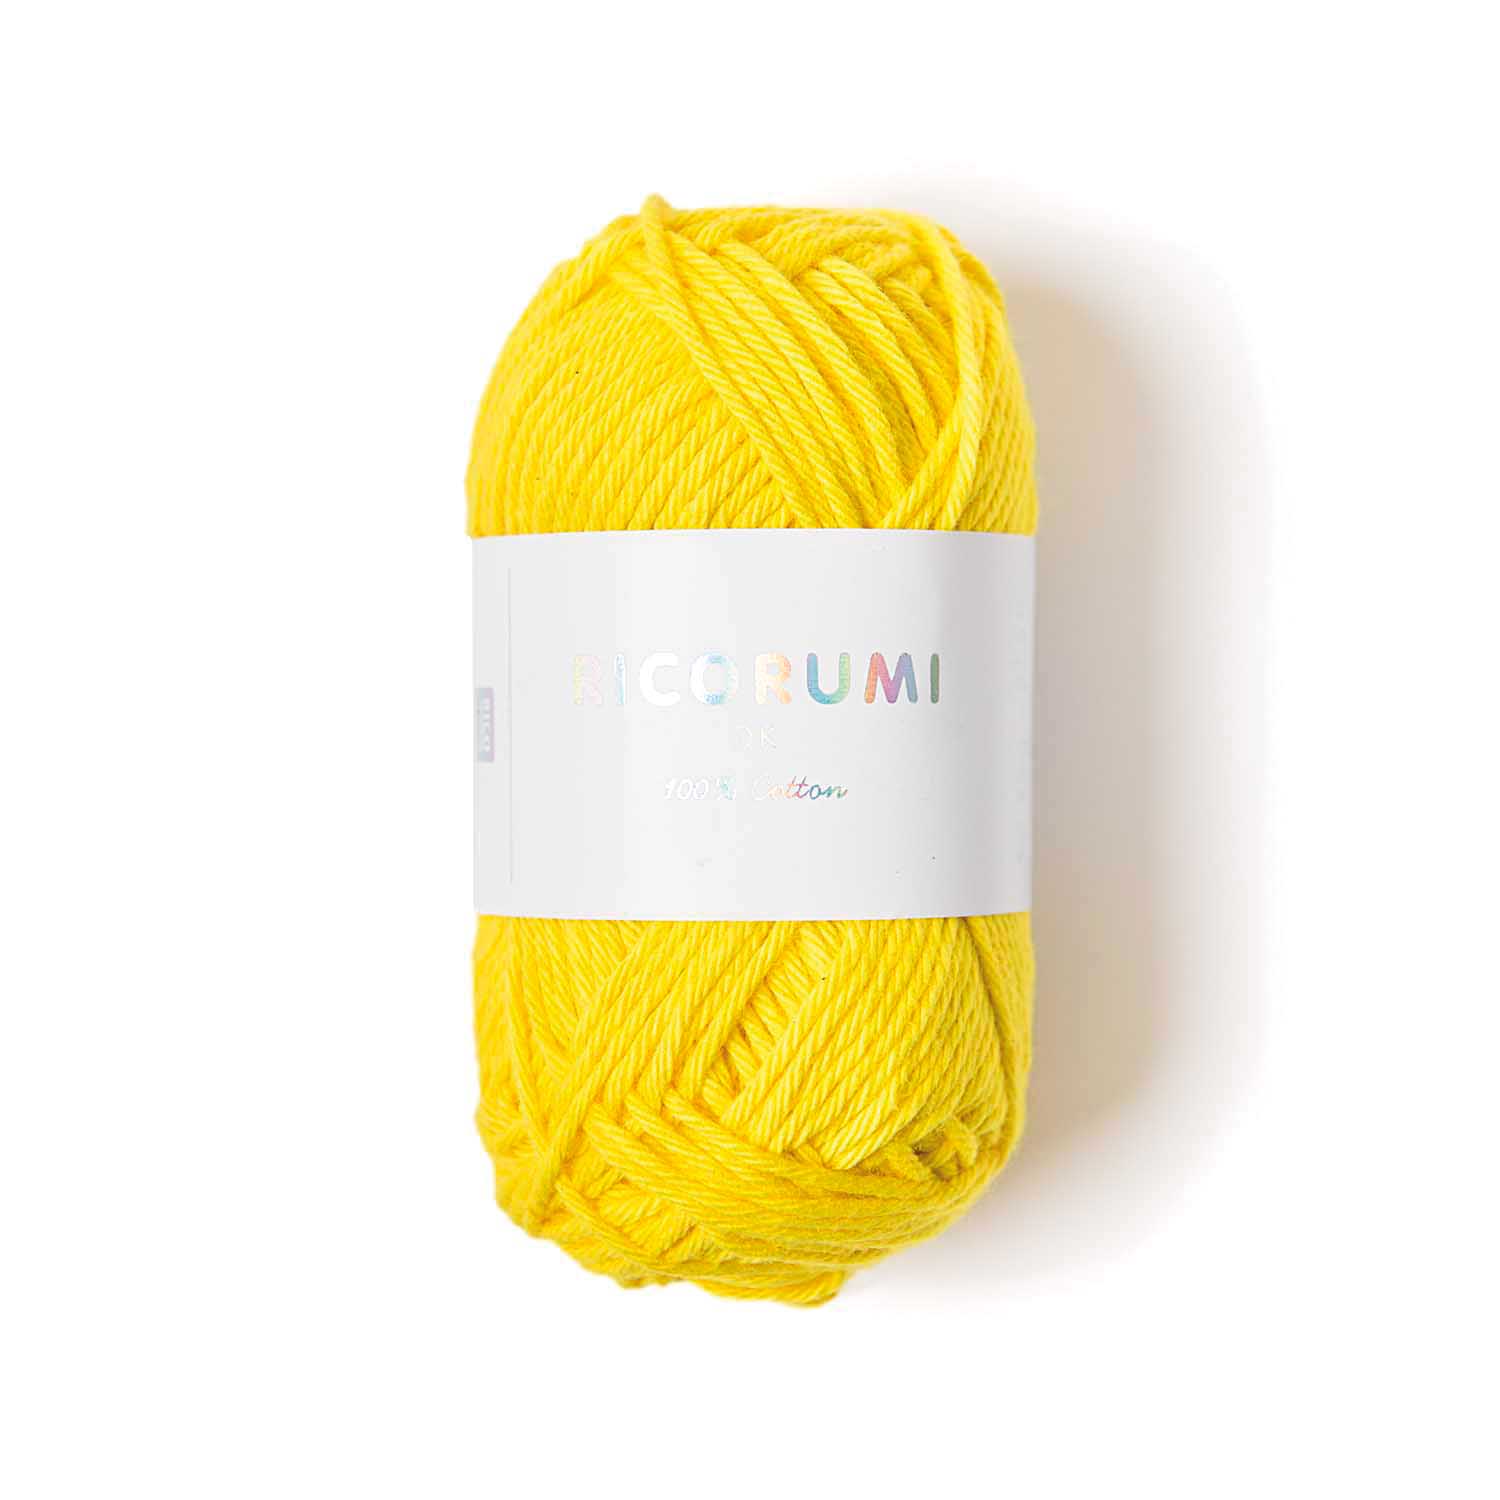 Rico RICORUMI Chenille Nilli Nilli DK Amigurumi Crochet Yarn Cute 25g Balls